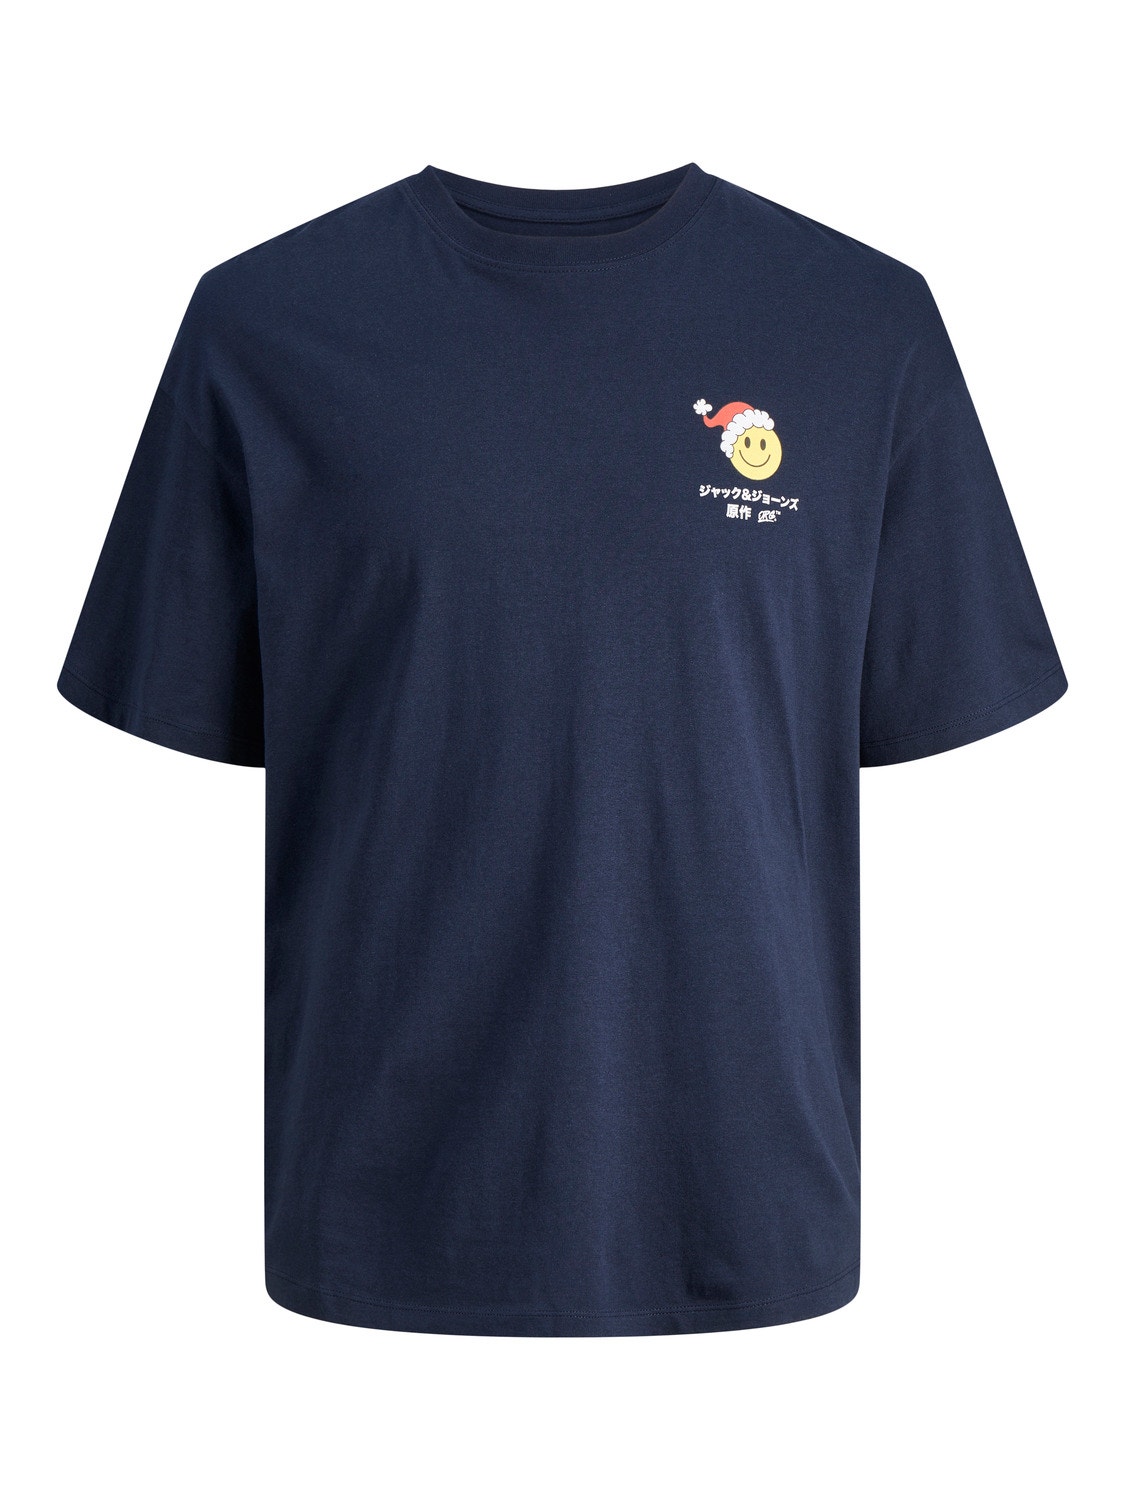 Jack & Jones X-mas Crew neck T-shirt -Sky Captain - 12247683